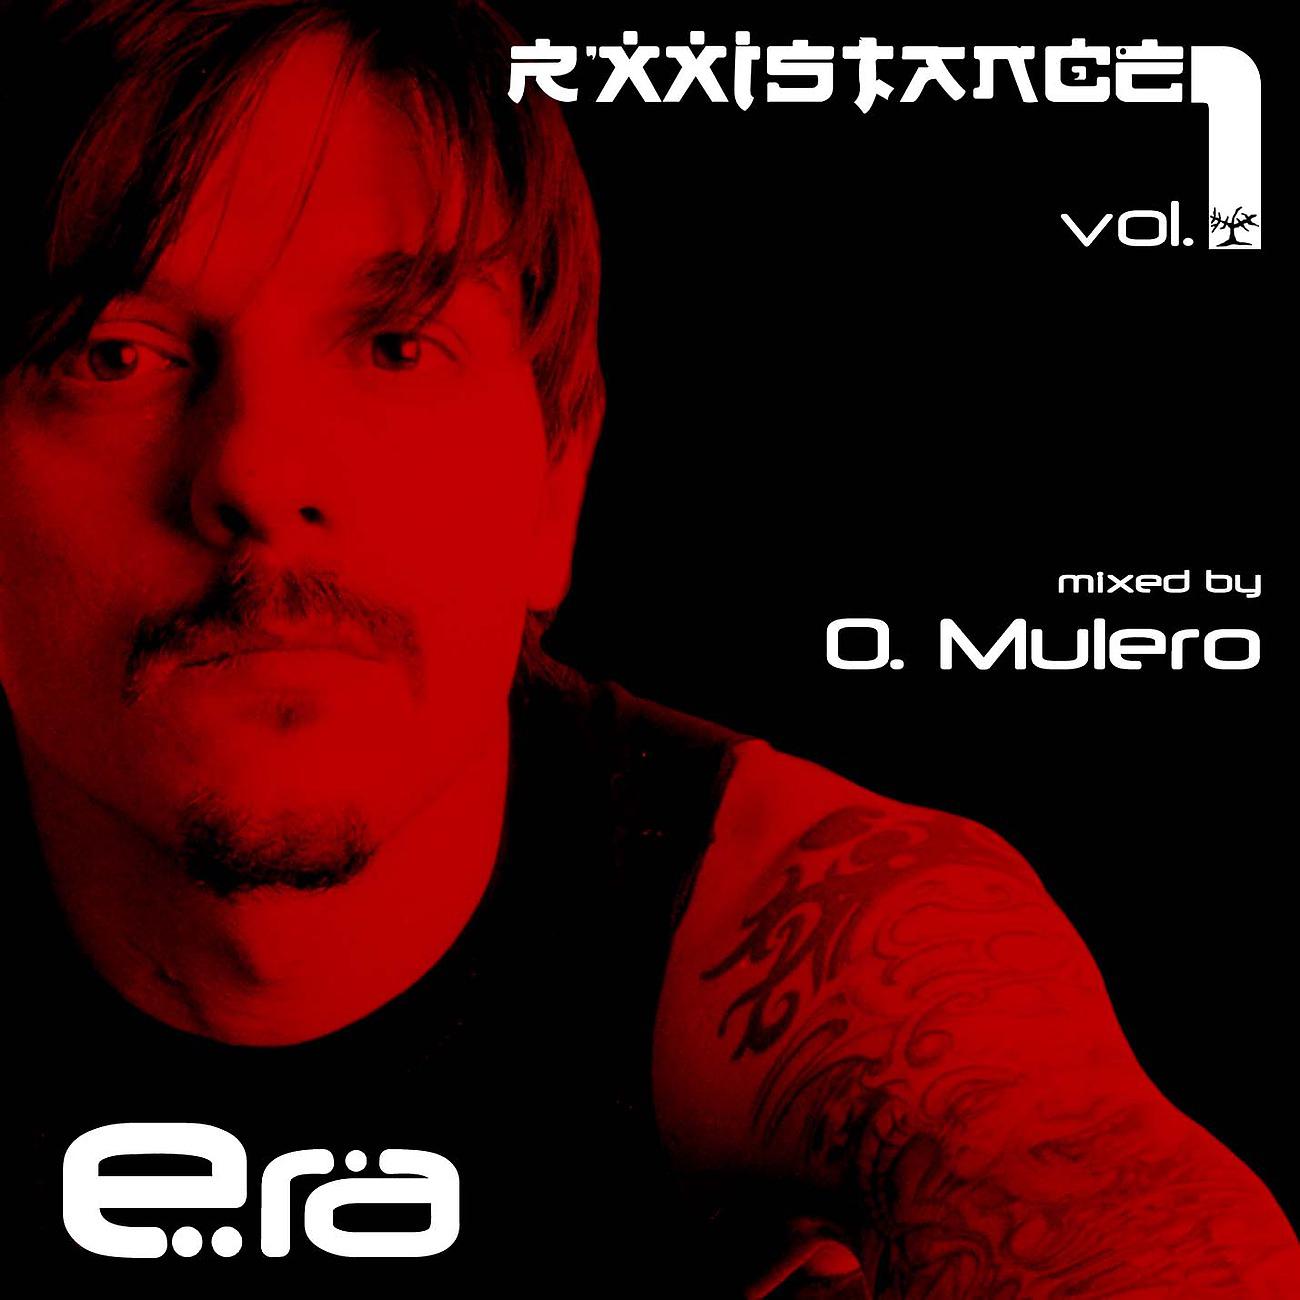 Постер альбома Rxxistance Vol. 1: Era, Mixed by Oscar Mulero